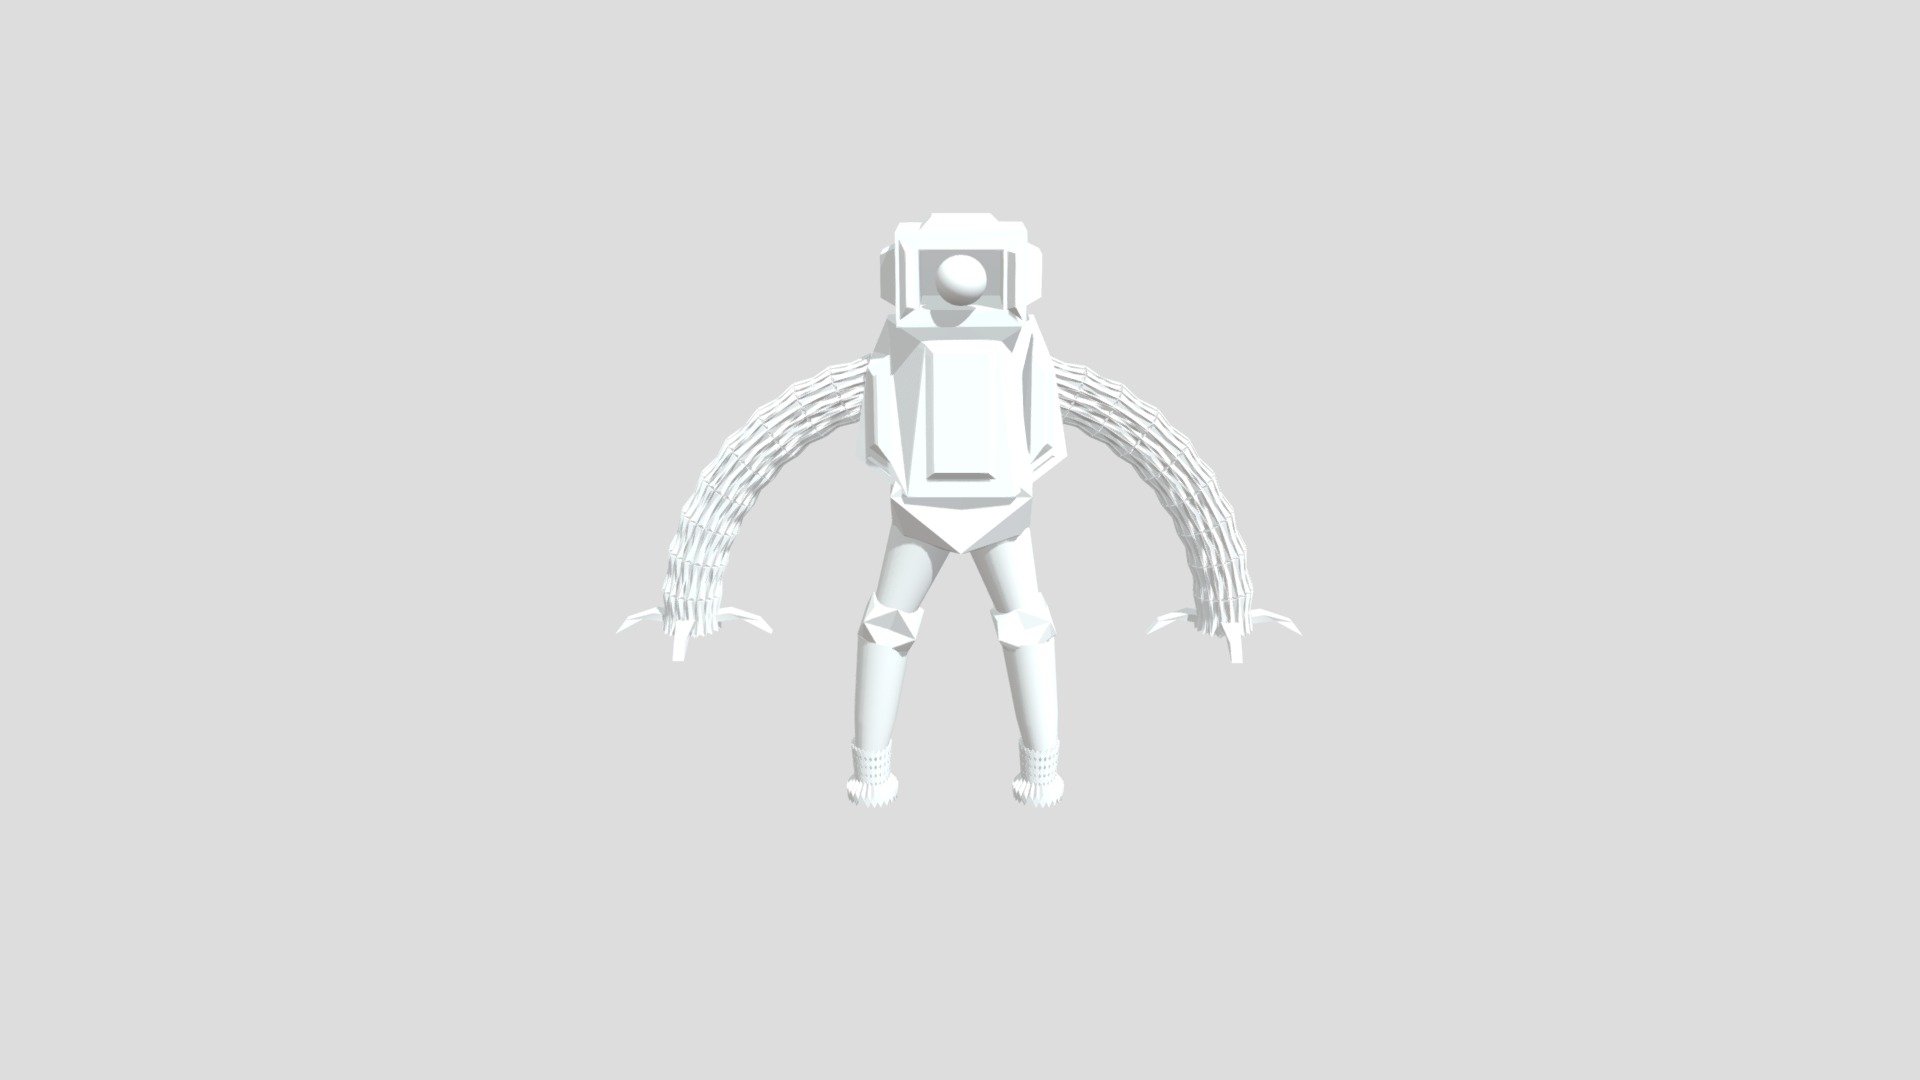 Robot animation